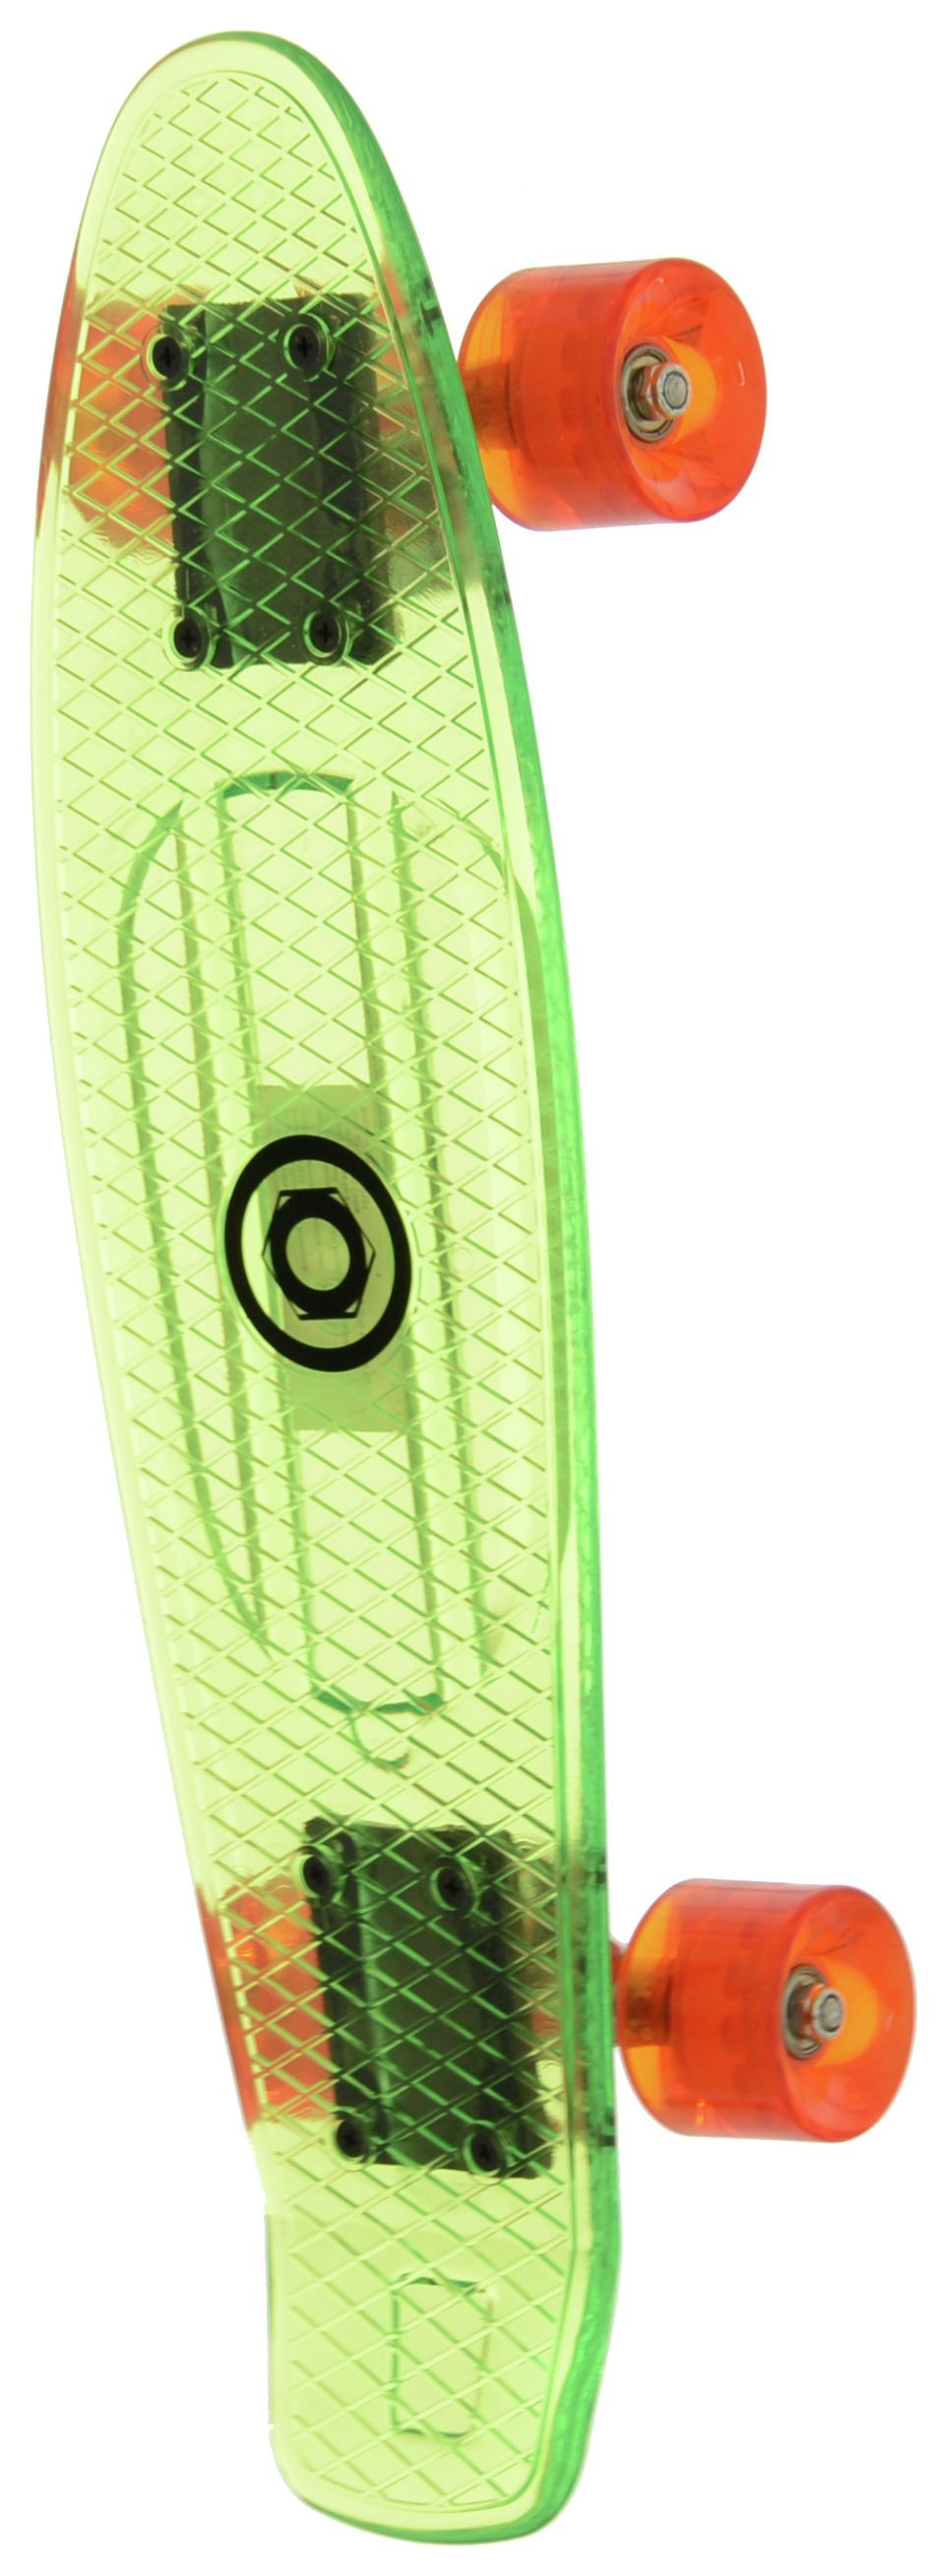 Bored Neon Ice XT Cruiser Skateboard - Lime